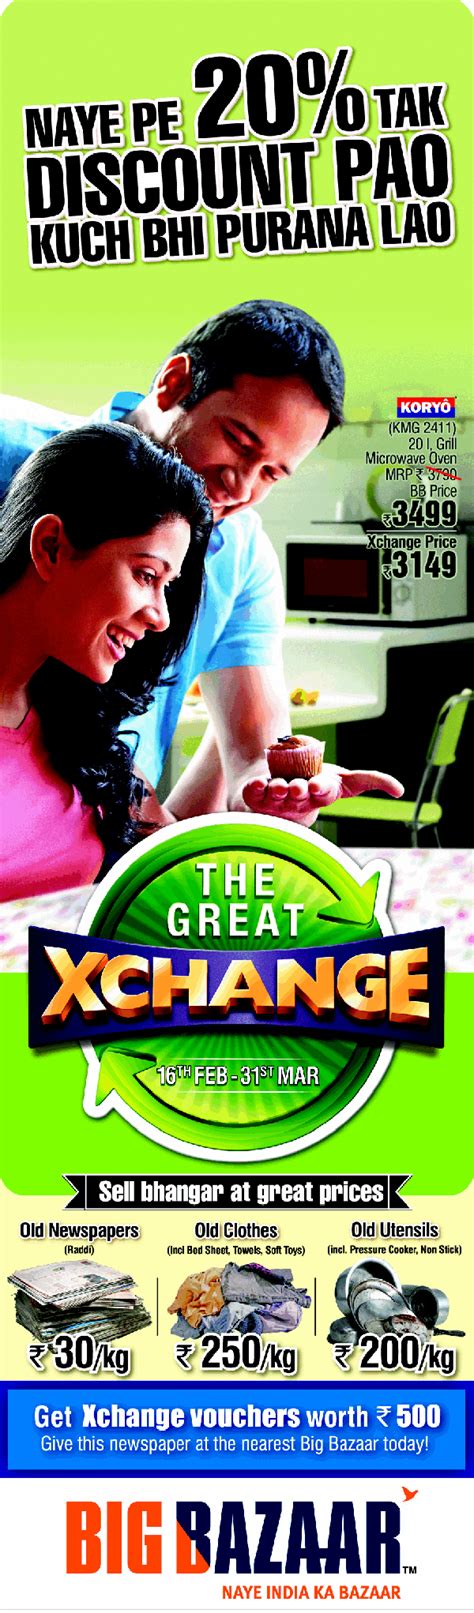 Big Bazaar The Great Exchange Offer Mumbai New Delhi Bangalore